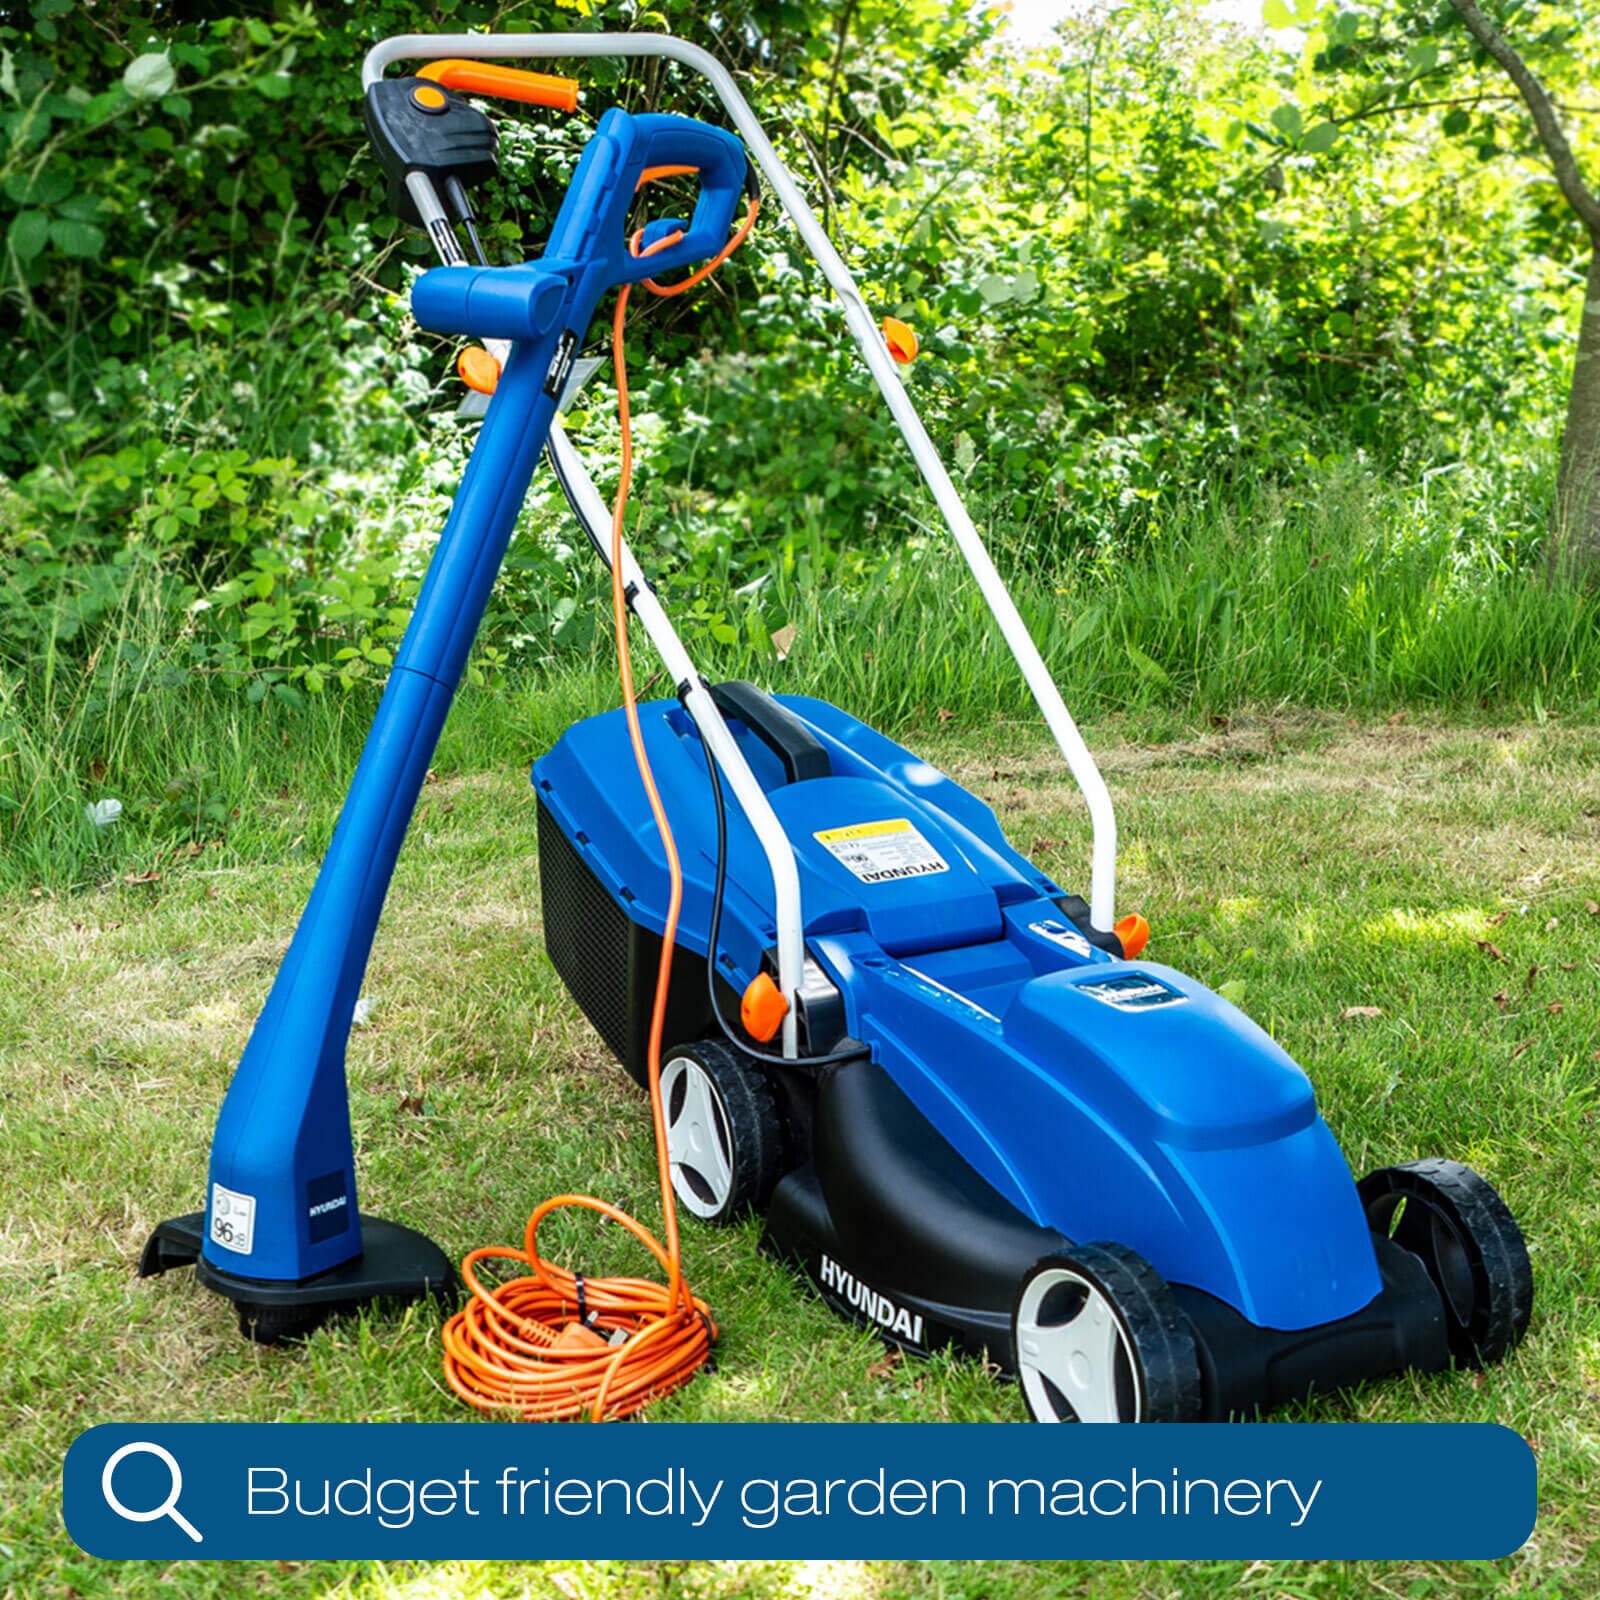 Top 10 Budget-Friendly Garden Machinery for Savvy Gardeners